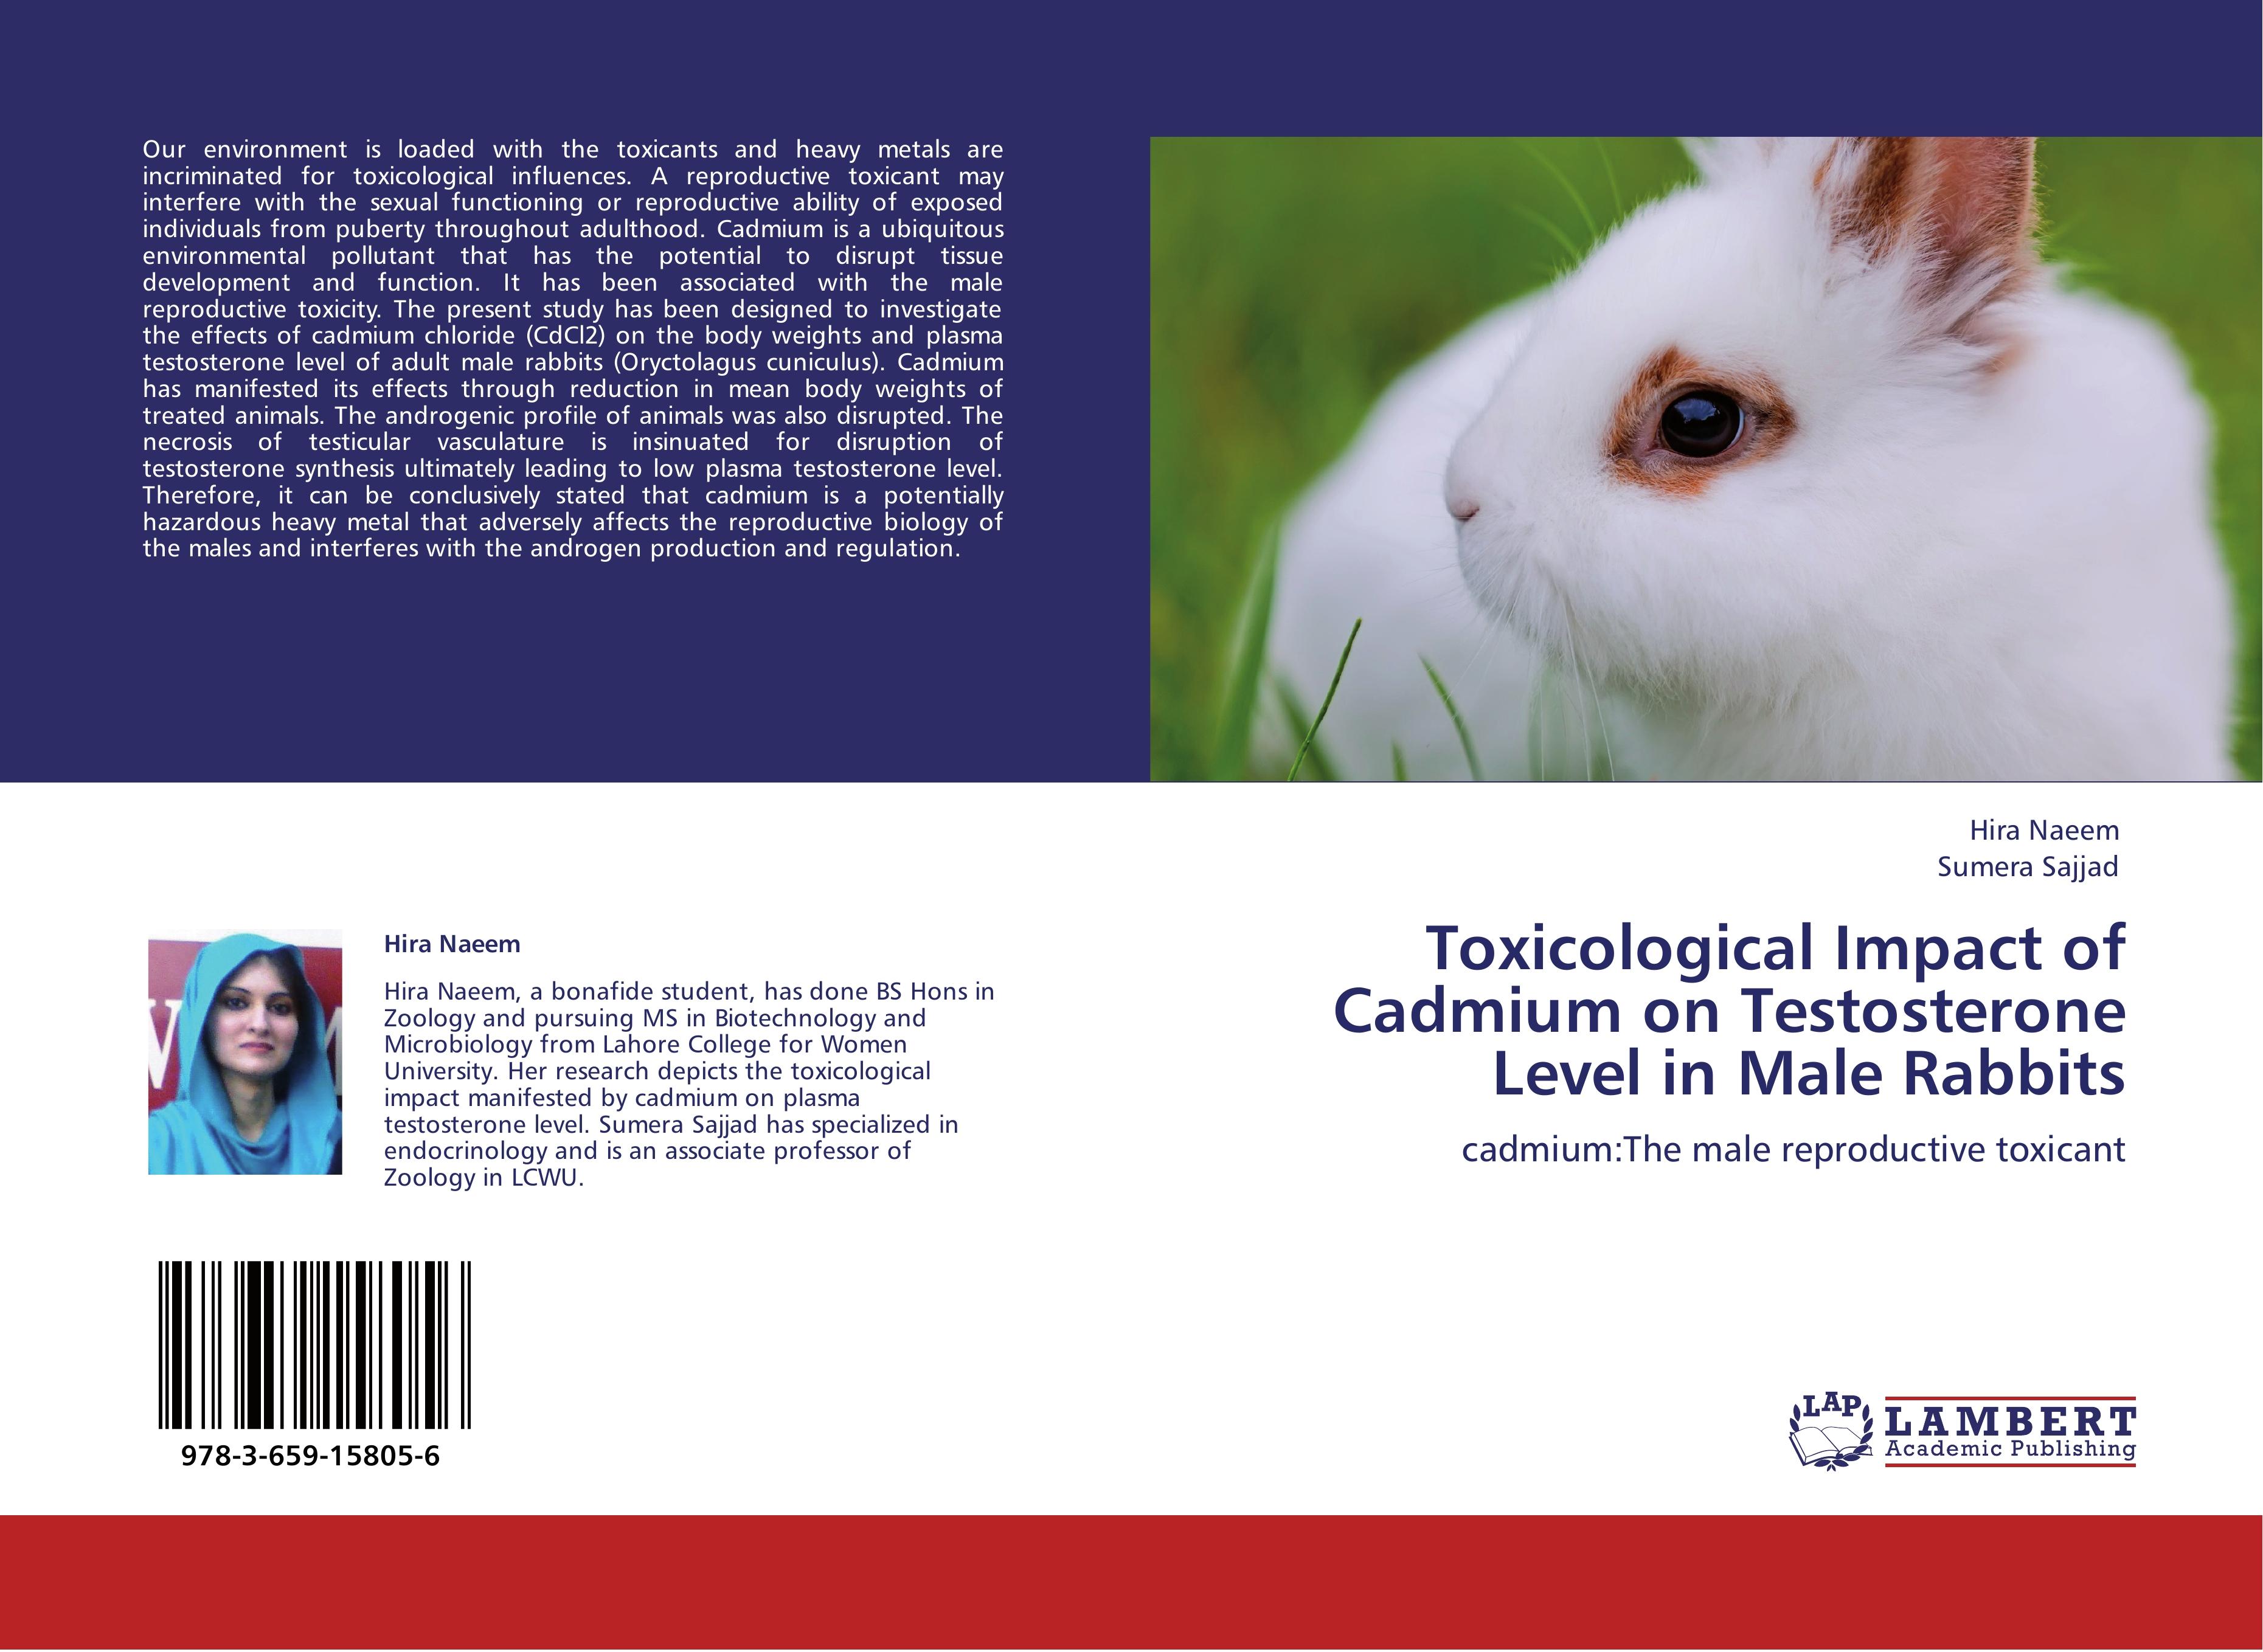 Toxicological Impact of Cadmium on Testosterone Level in Male Rabbits - Hira Naeem|SUMERA SAJJAD